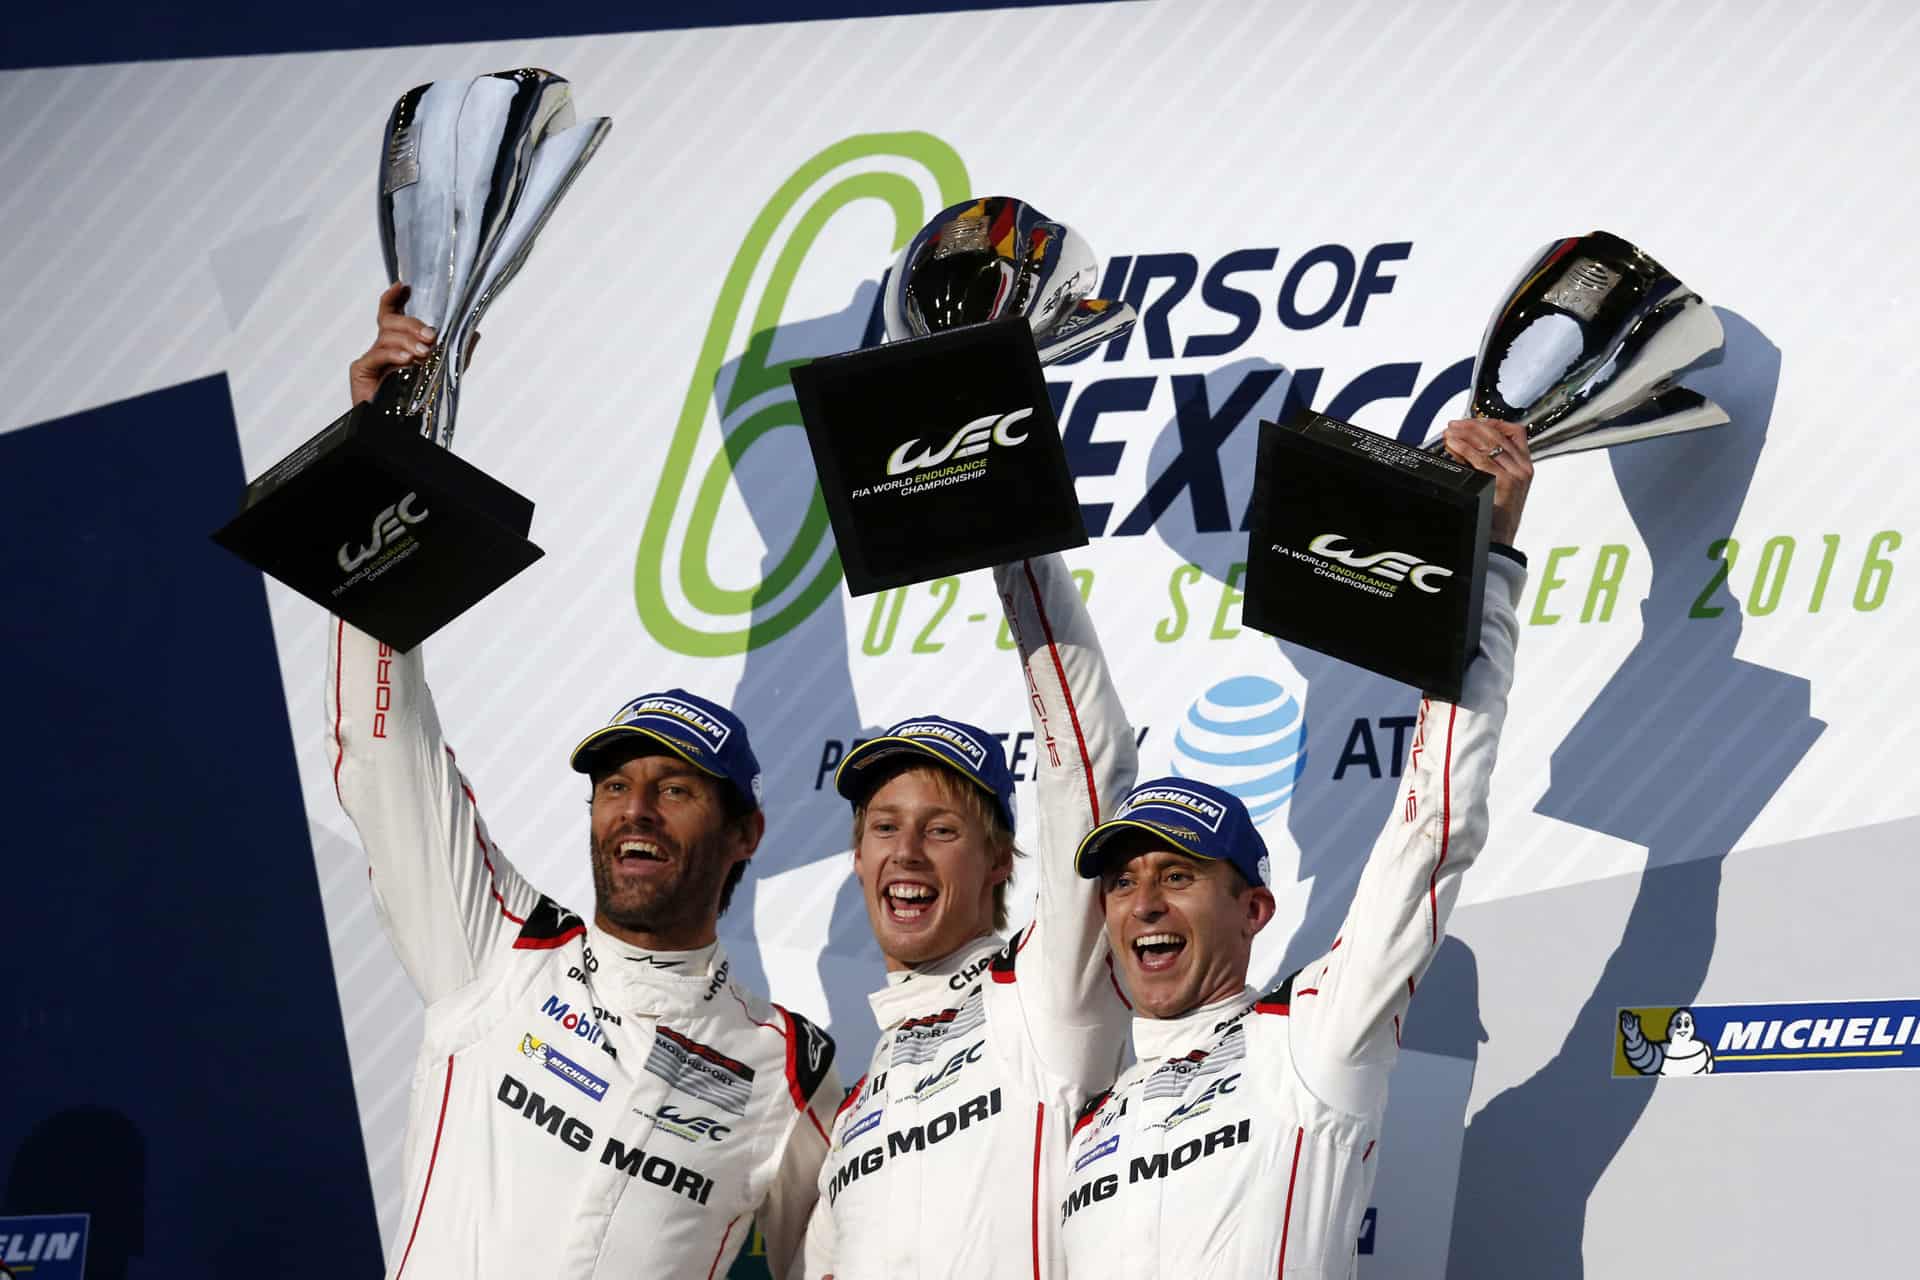 Porsche Team: Mark Webber, Brendon Hartley, Timo Bernhard (l-r)